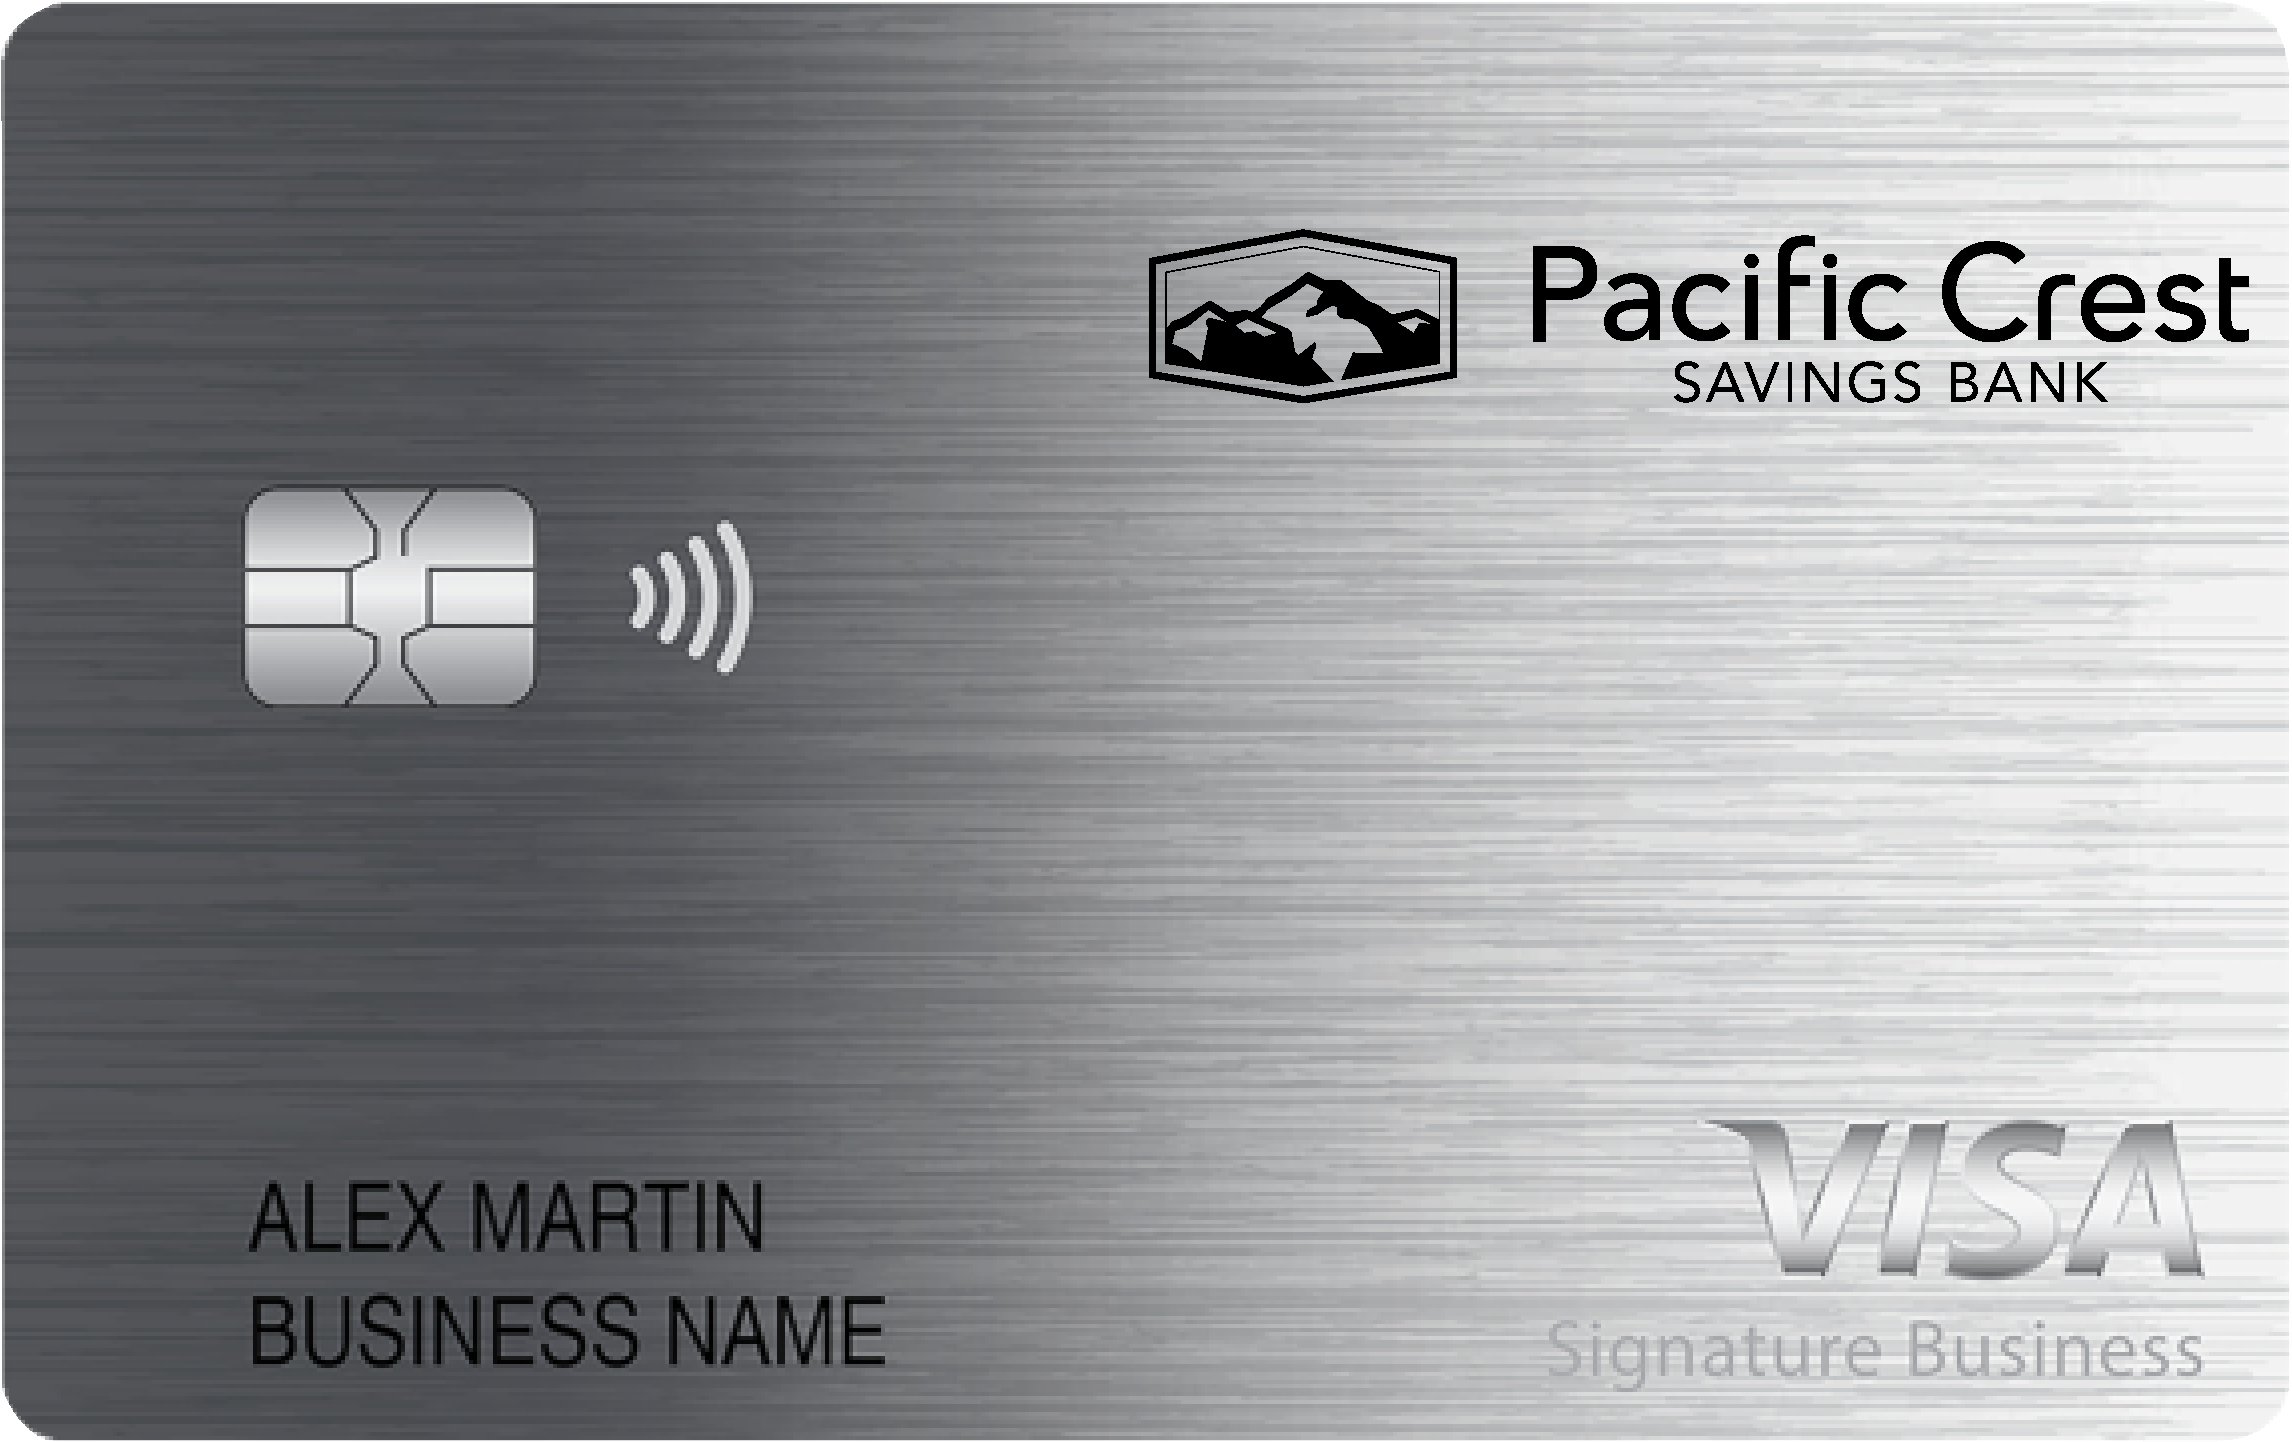 Pacific Crest Savings Bank Smart Business Rewards Card